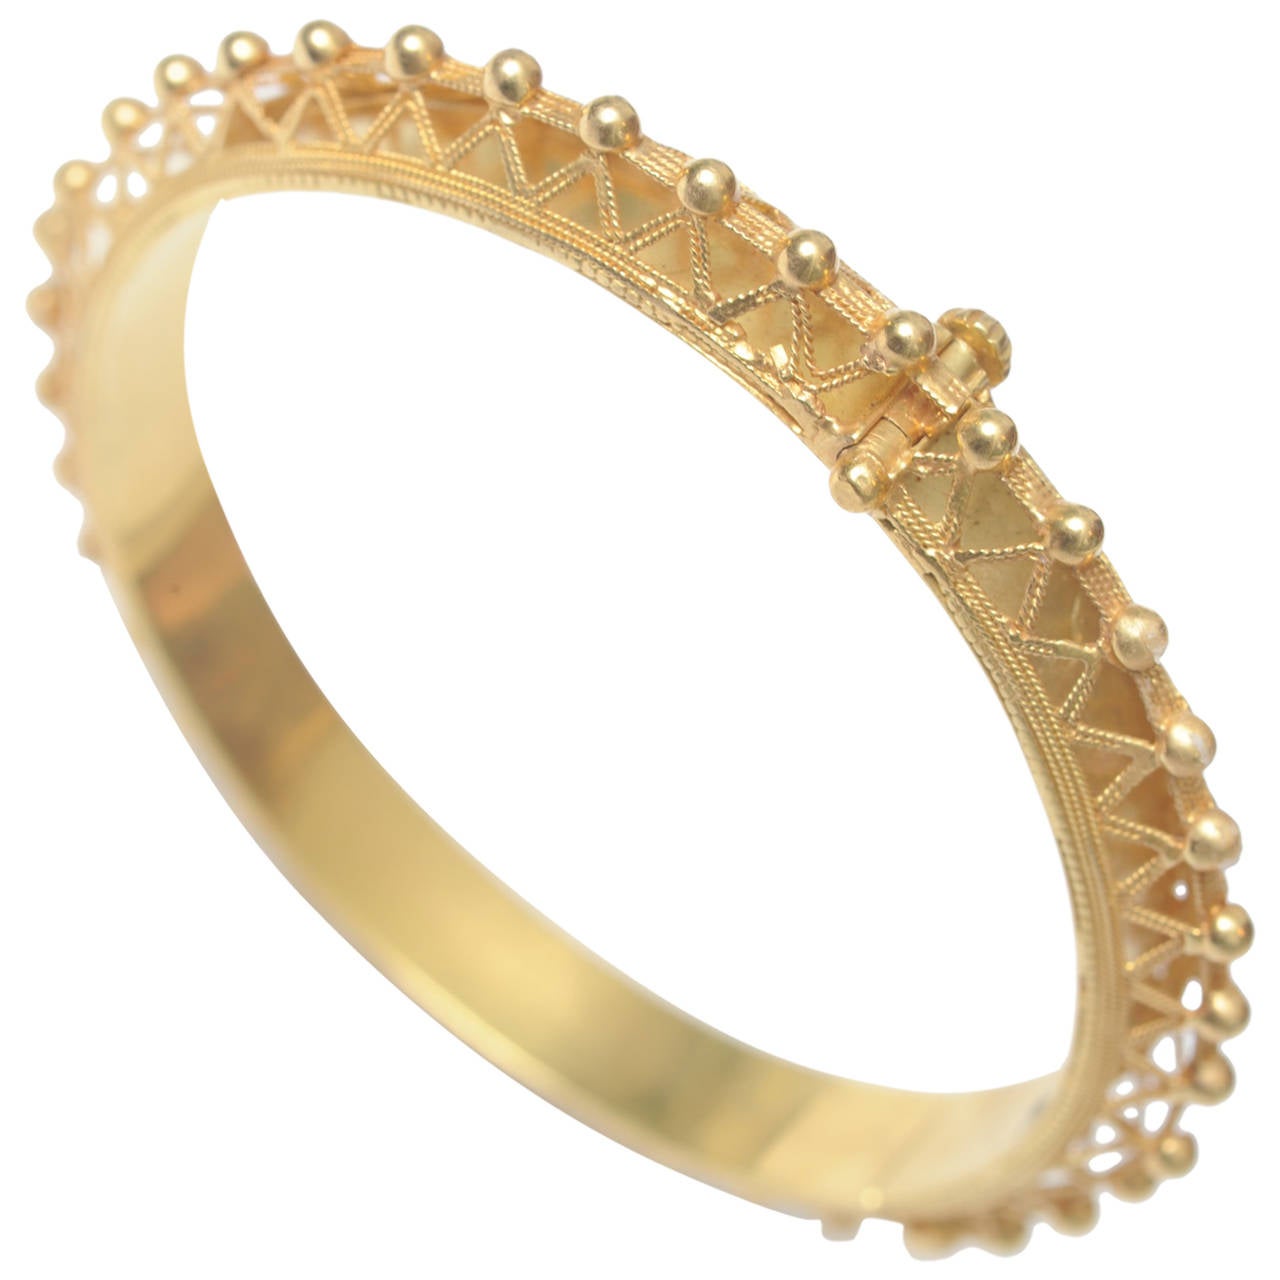 22K Gold Bangle Bracelet with Fine Granulation Work circa 1970s Etruscan Revival